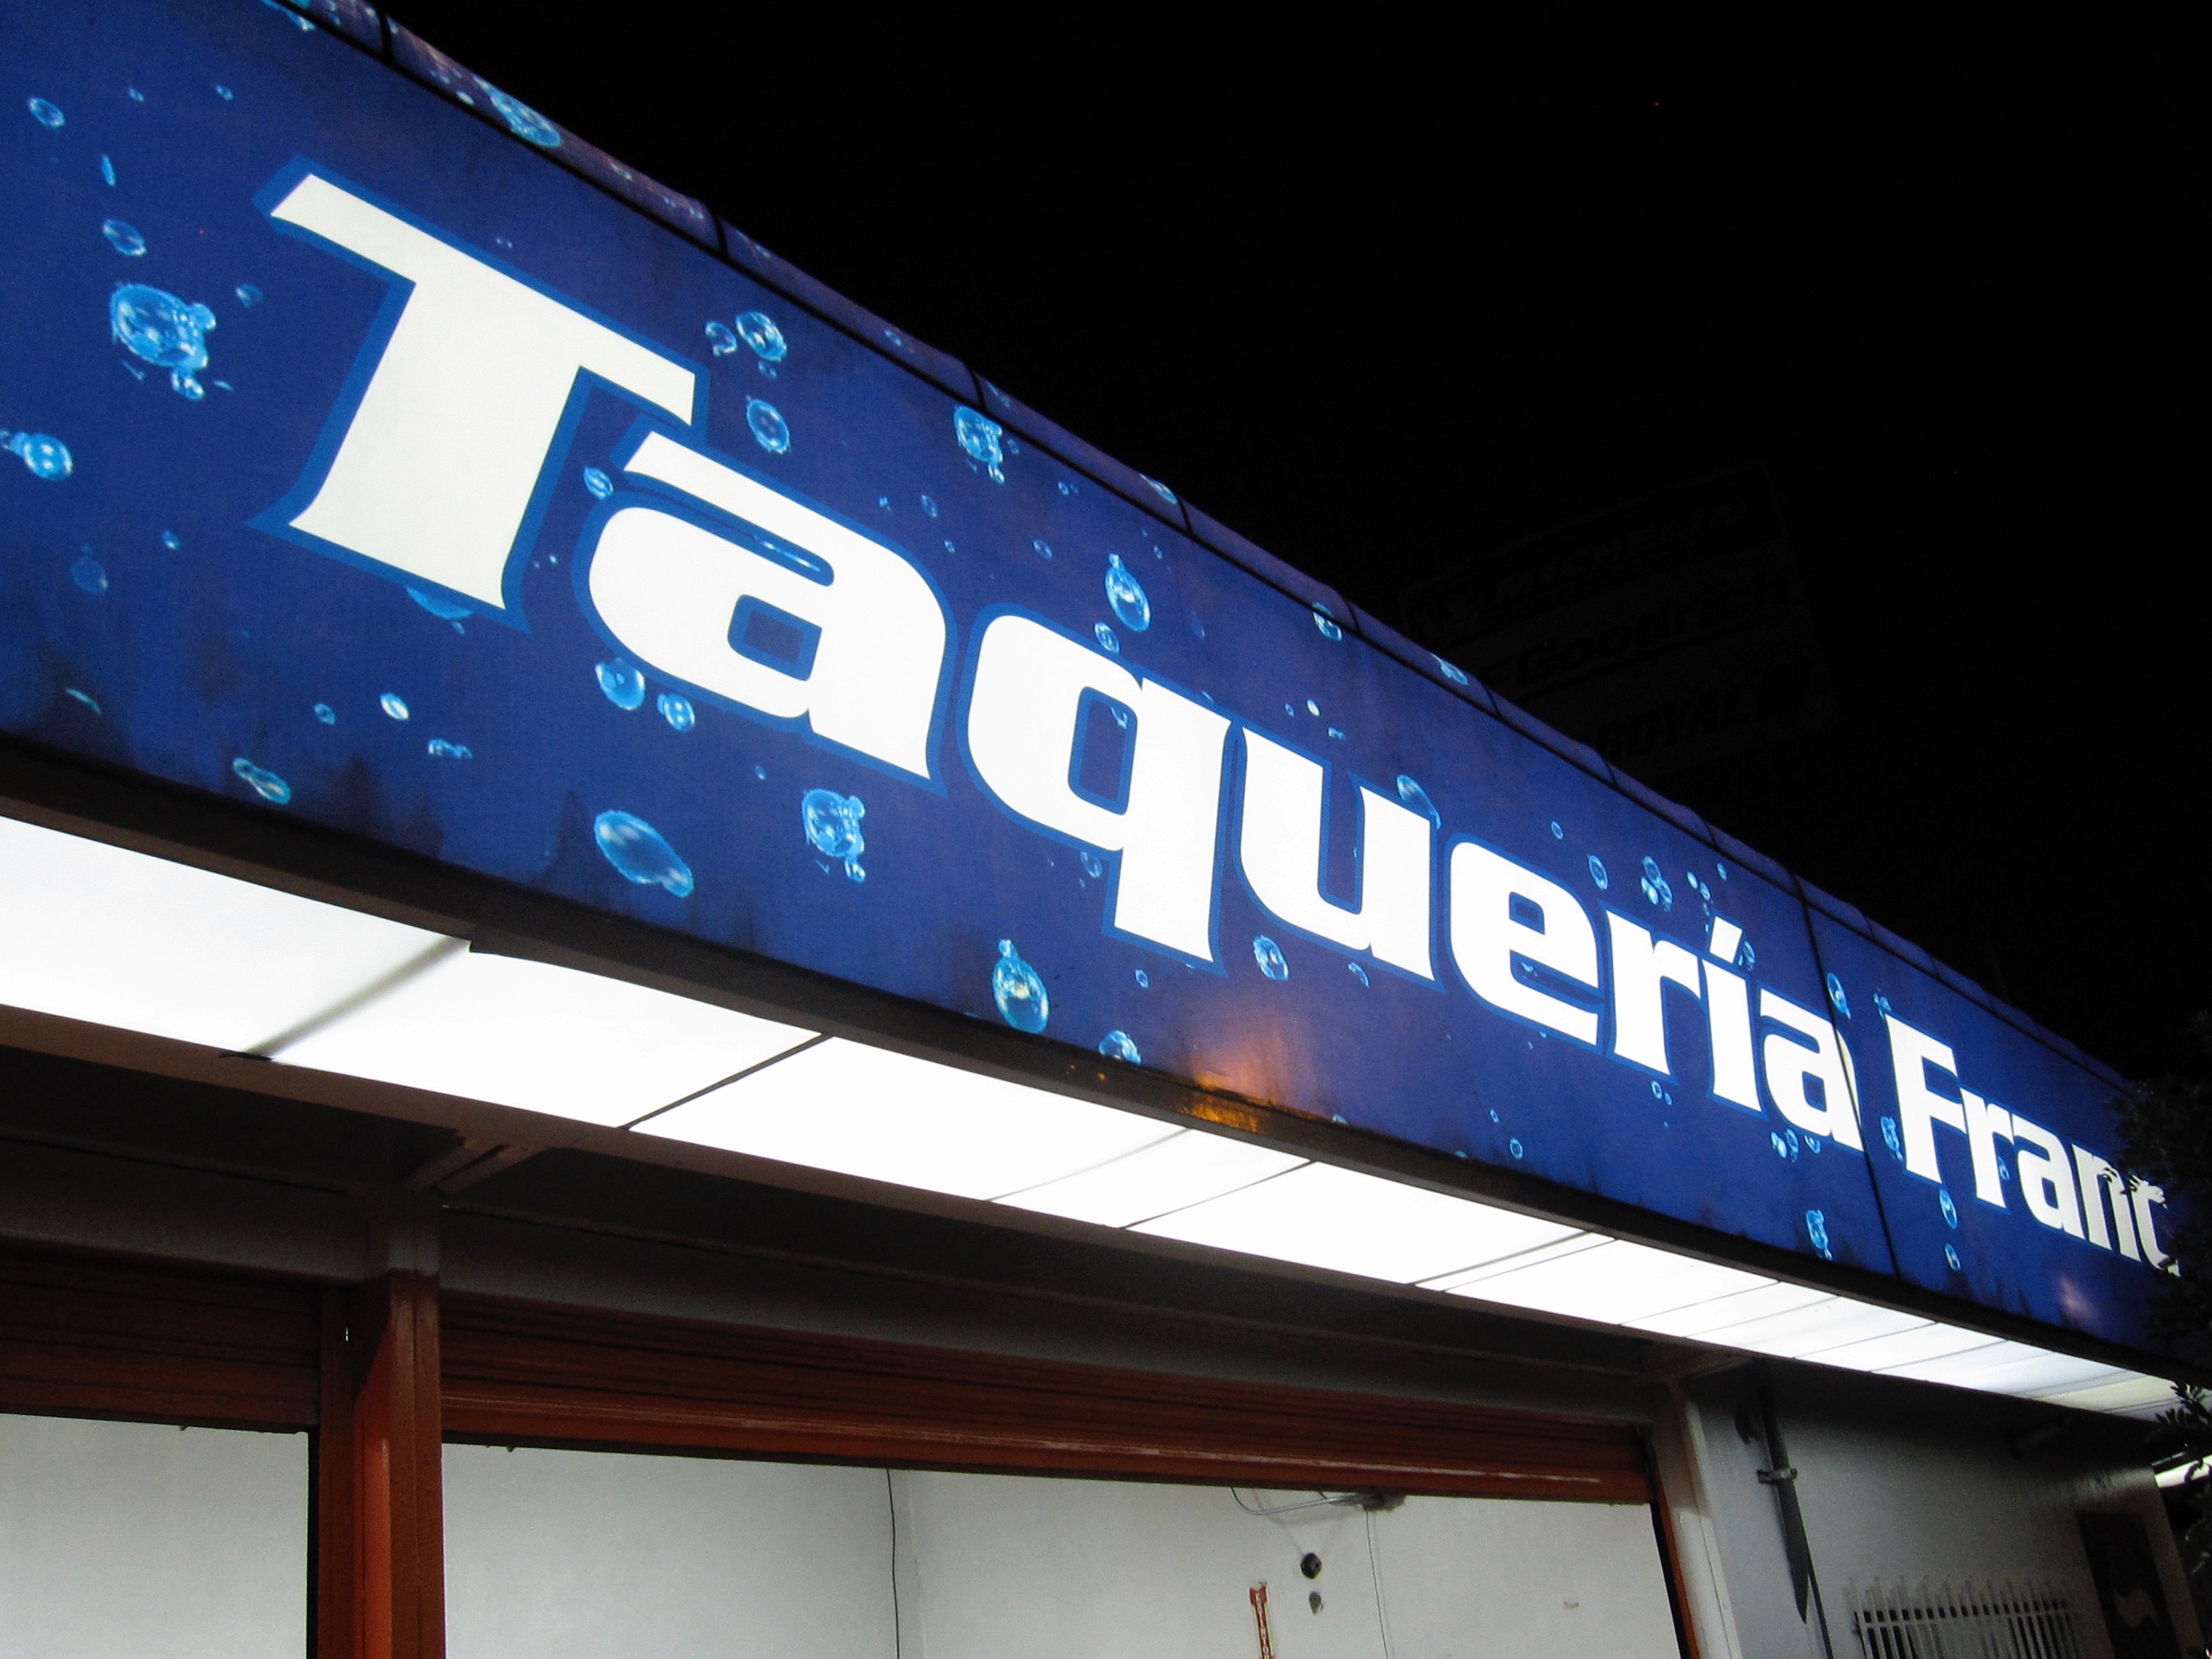 Restaurant Tijuana